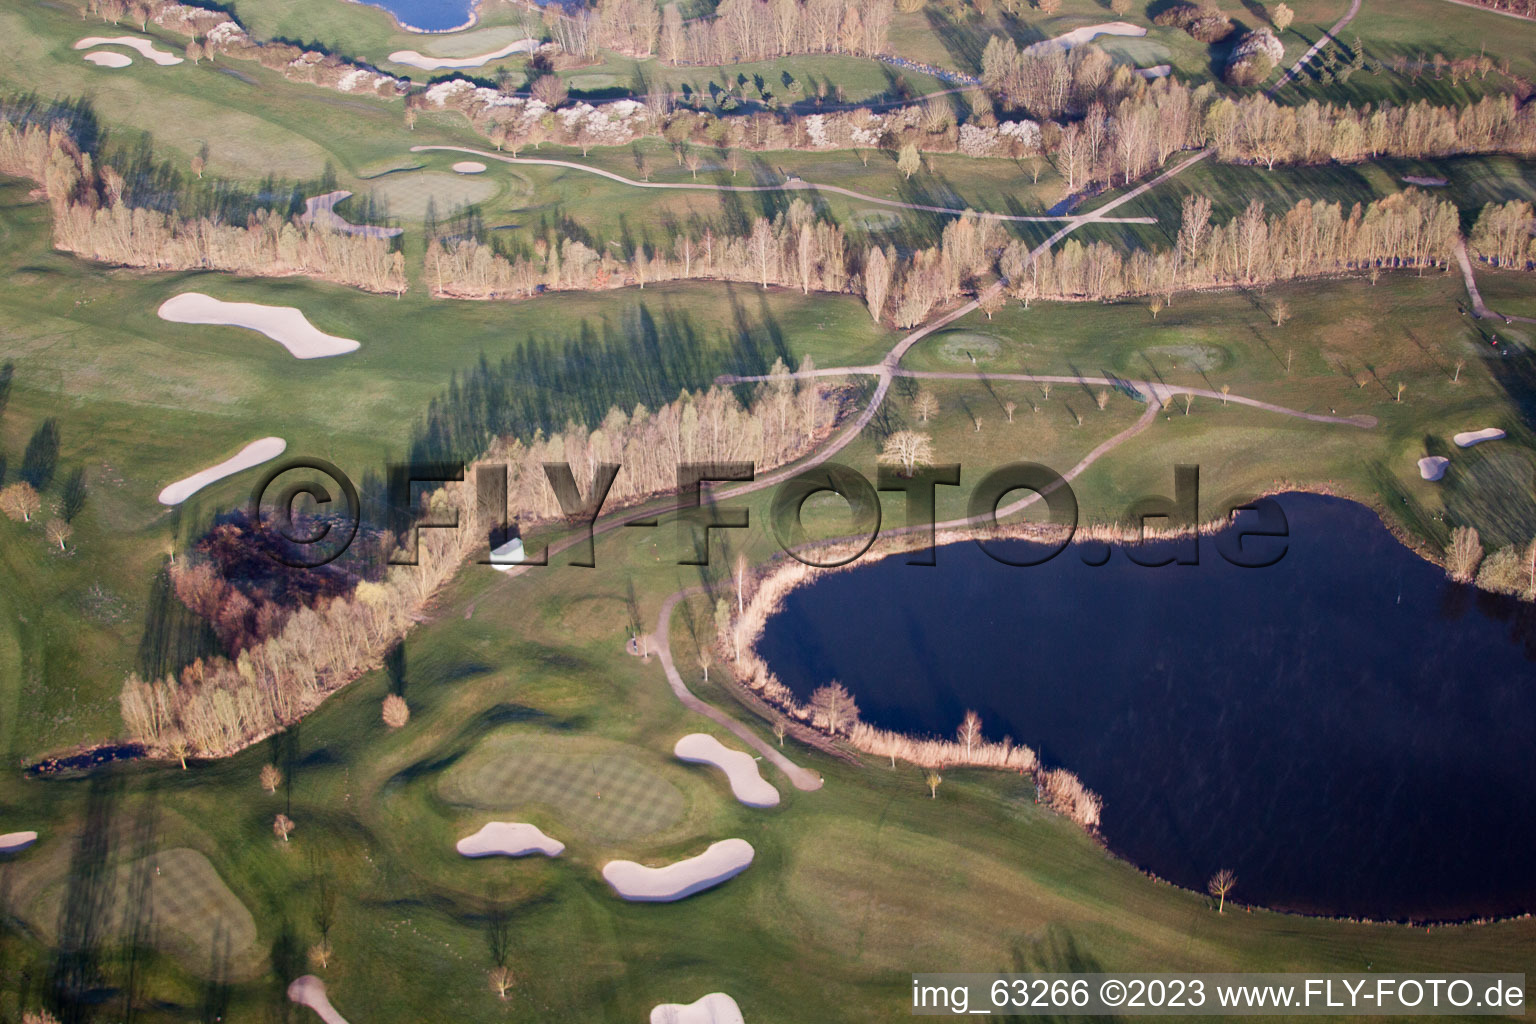 Aerial view of Dreihof Golf Club in Essingen in the state Rhineland-Palatinate, Germany